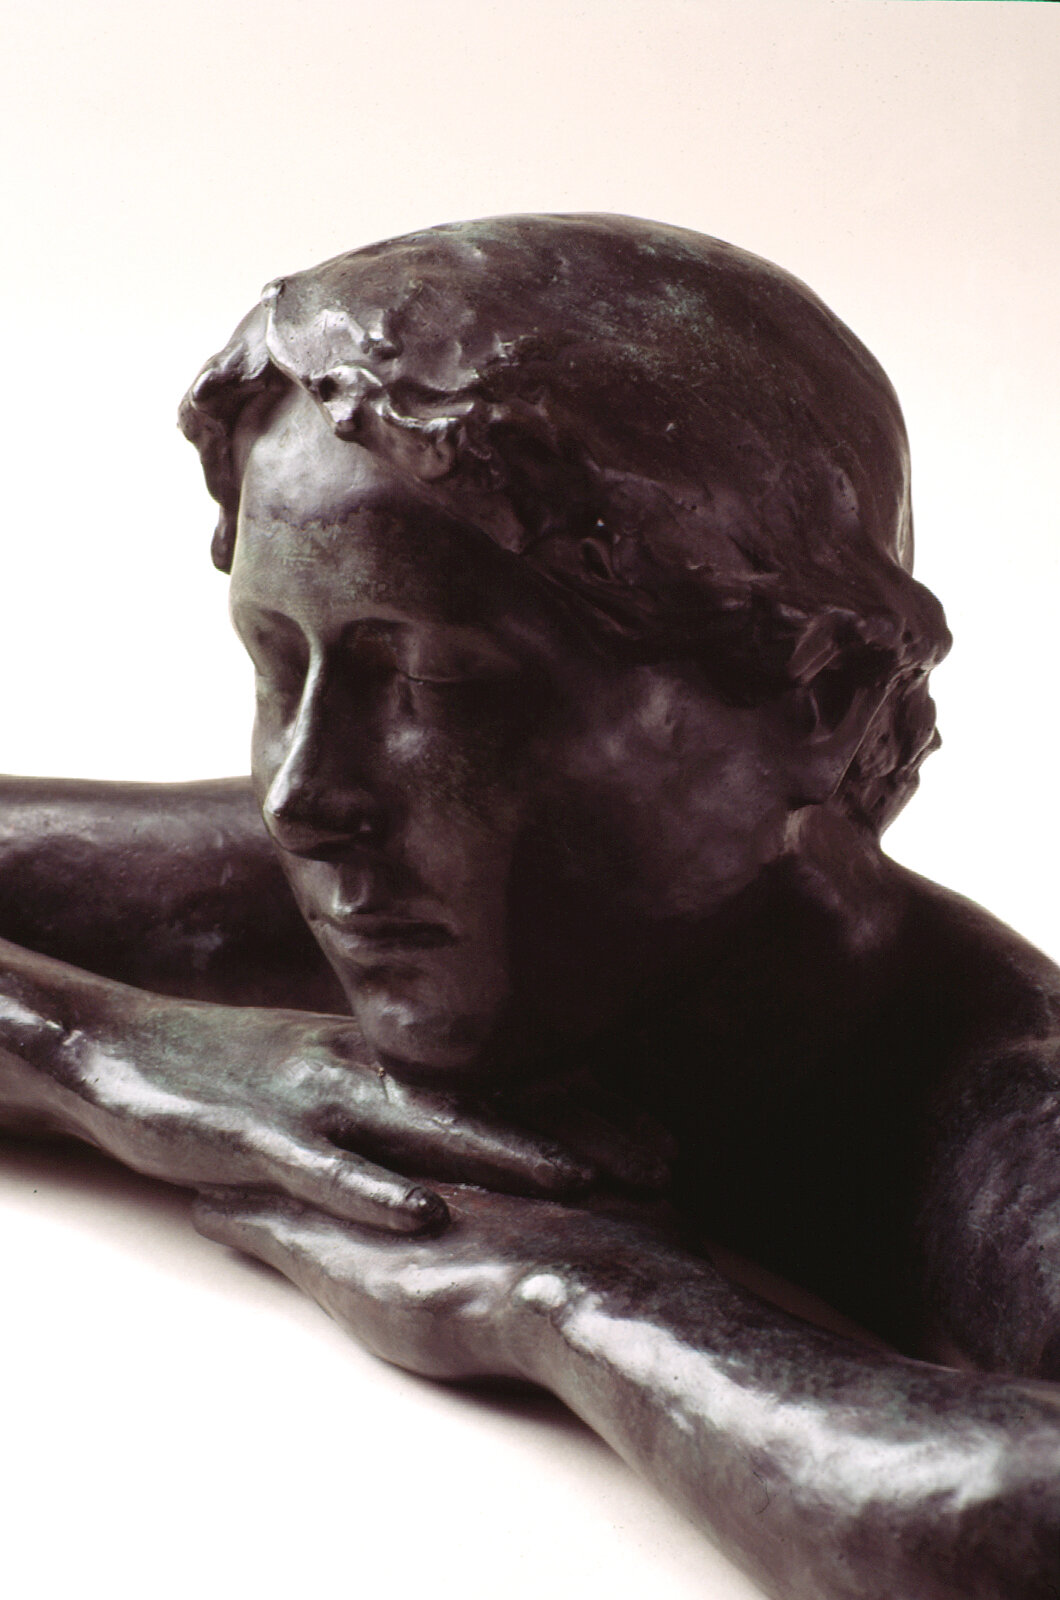 &lt;p&gt;&lt;strong&gt;CAROLYN WIRTH&lt;/strong&gt;bronze sculpture&lt;a href="/carolyn-wirth-ccc2021"&gt;More →&lt;/a&gt;&lt;/p&gt; 